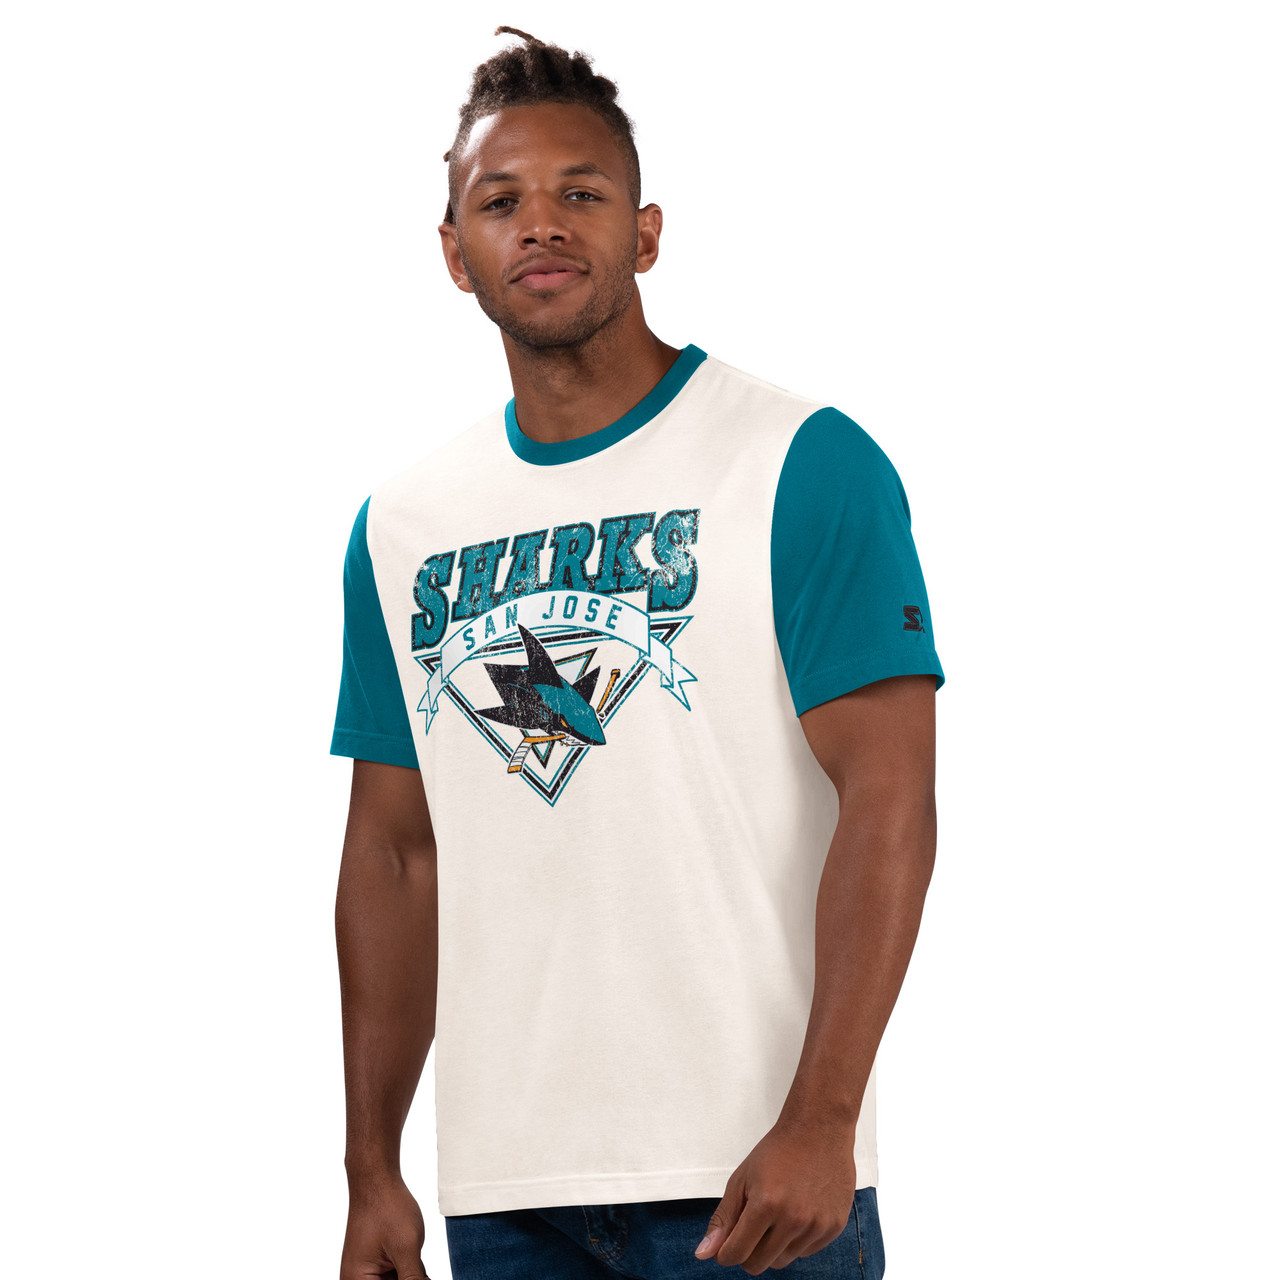 Youth Fanatic San Jose Sharks Patrick Marleau Jersey Black T Shirt Authentic